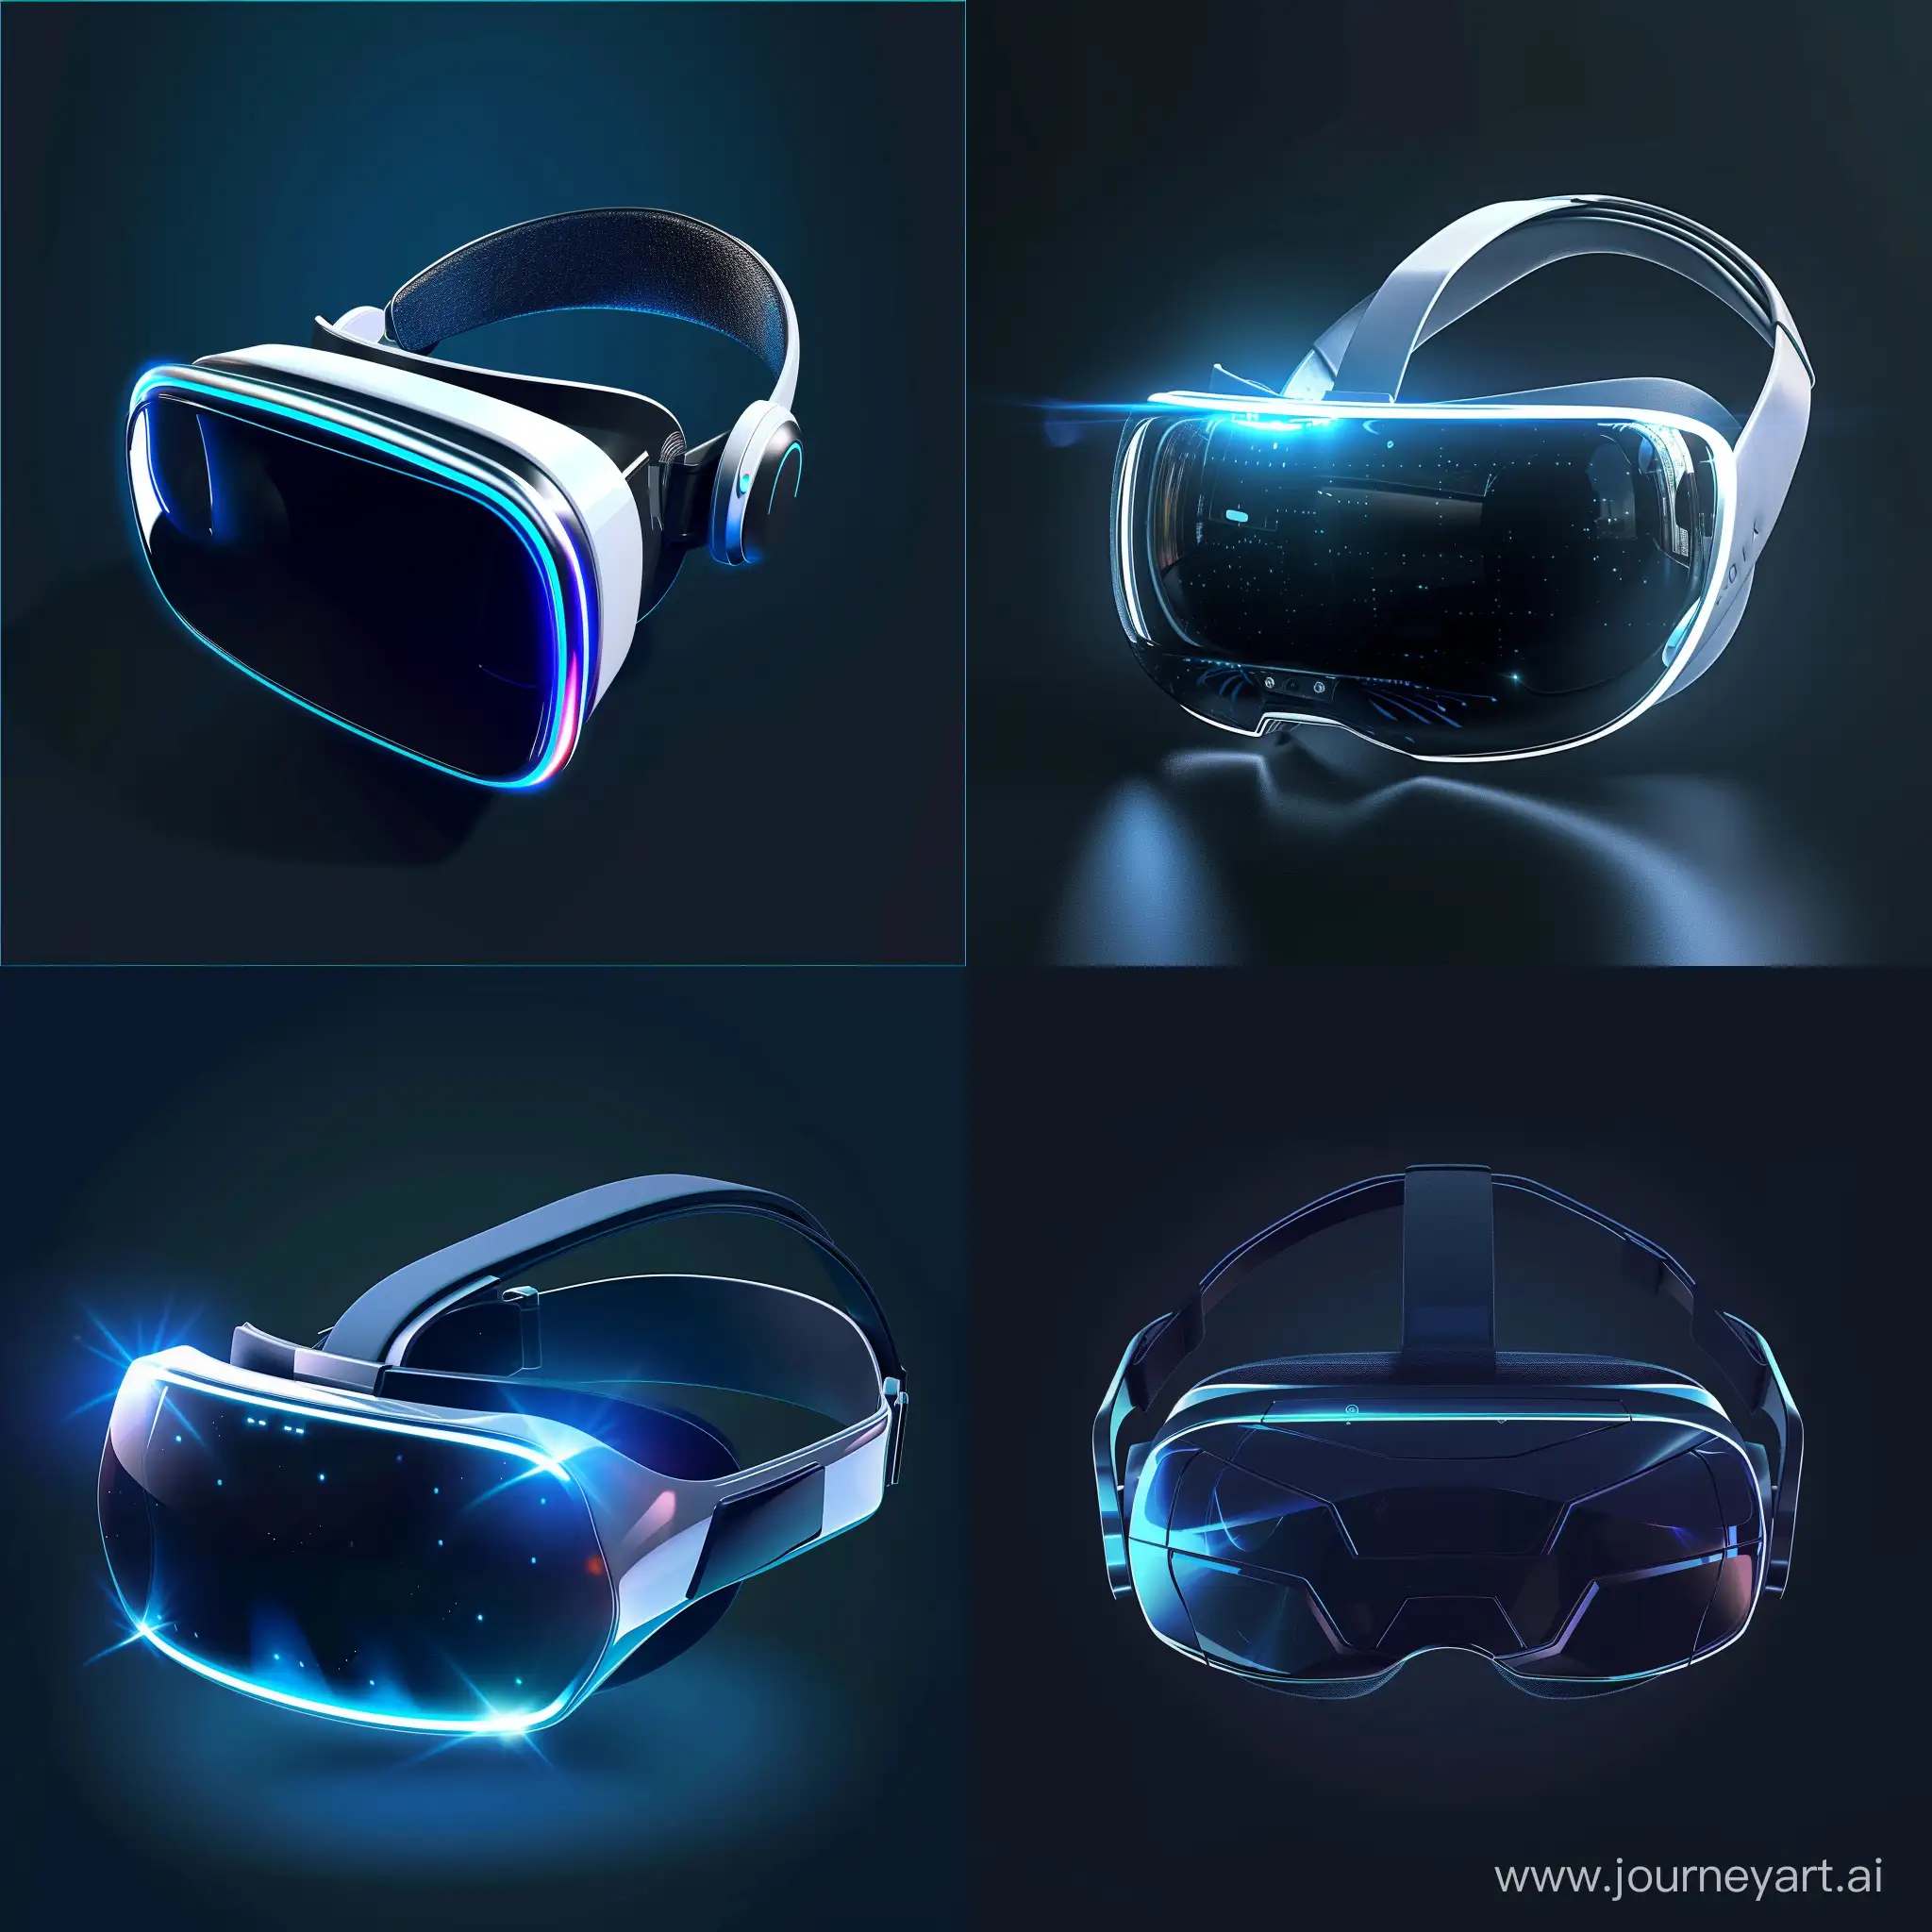 Immersive-Futuristic-VR-Headset-Experience